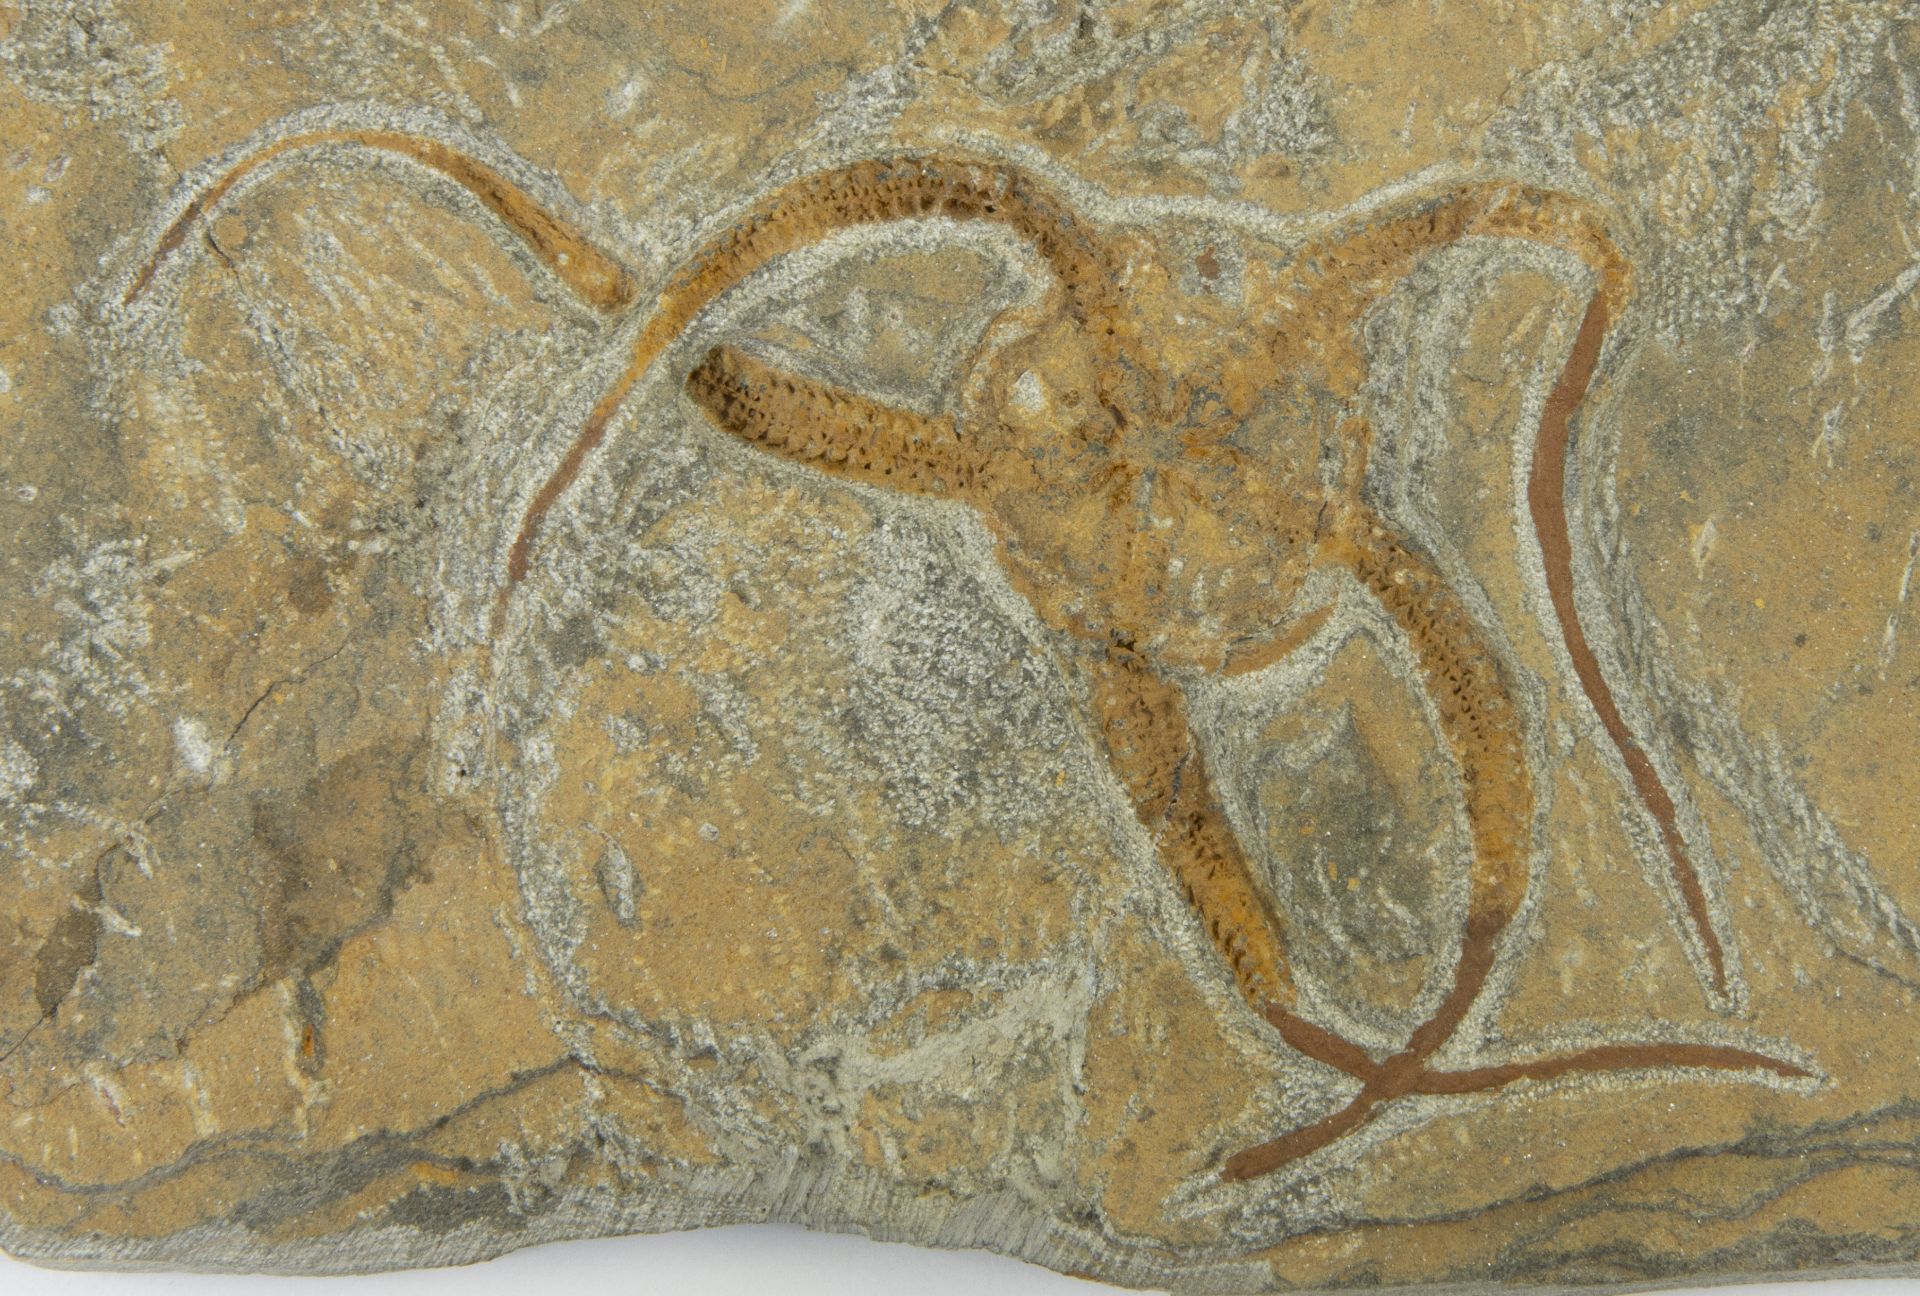 Starfish fossil, ophiura ordovicum (400 milj y) - Image 2 of 2